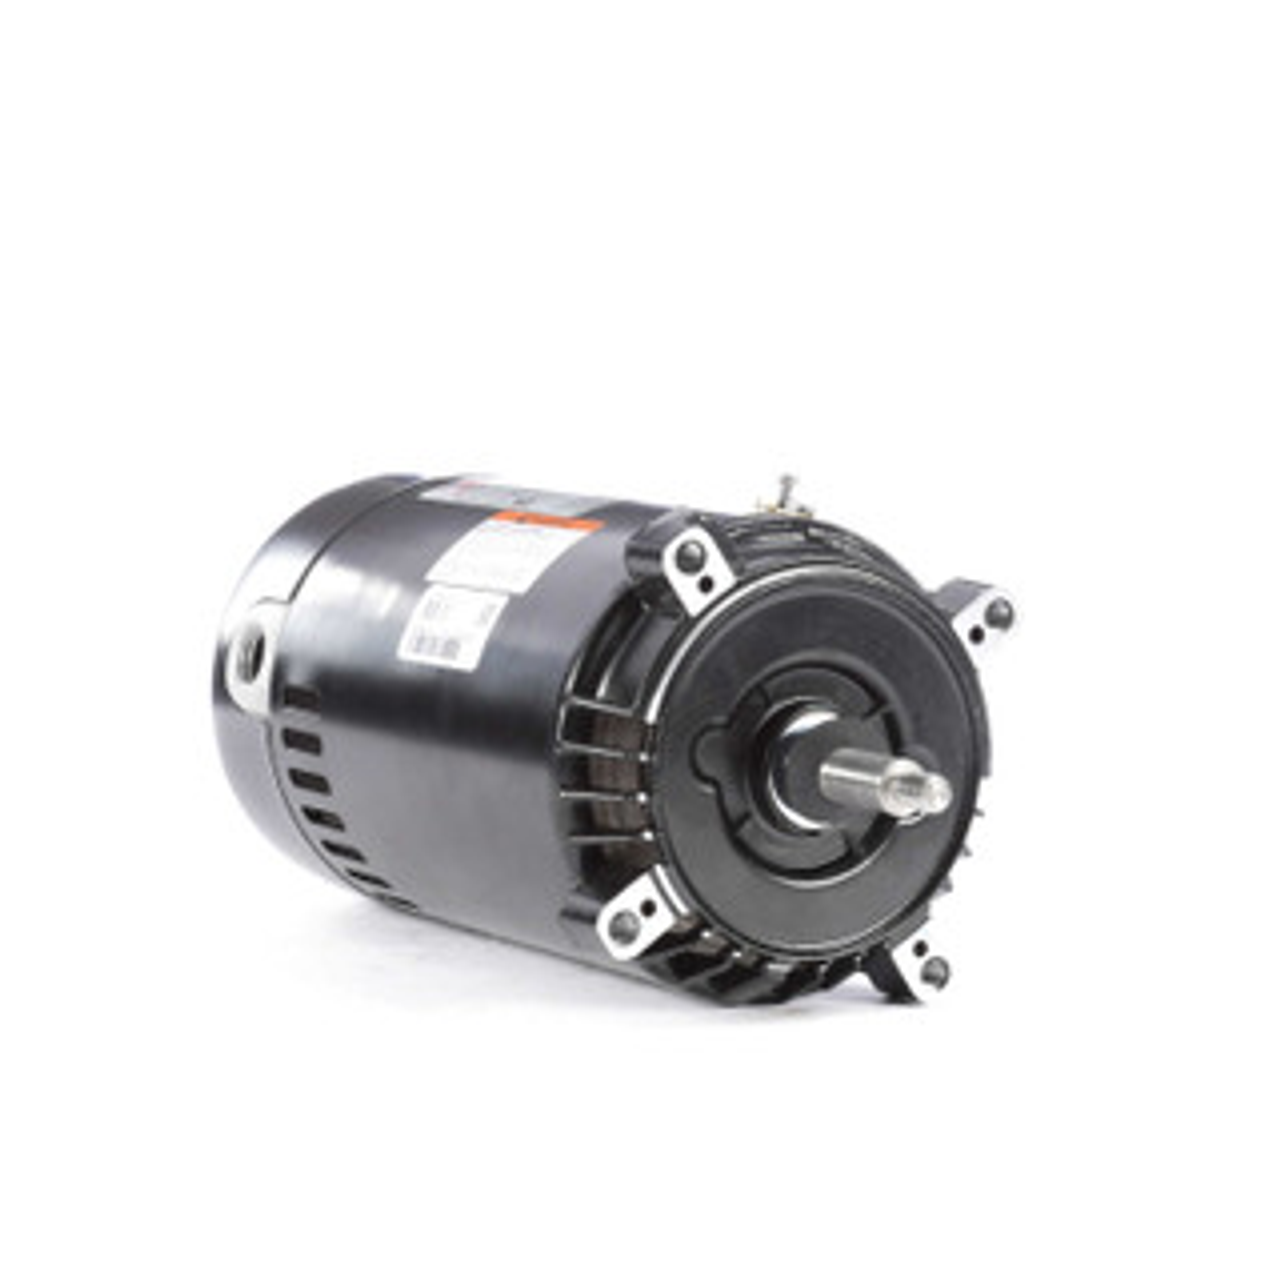 ST1072 Nema-C Flange 3/4 h.p. Pool filter motor, SP3007EEAZ Hayward super pump replacement motor